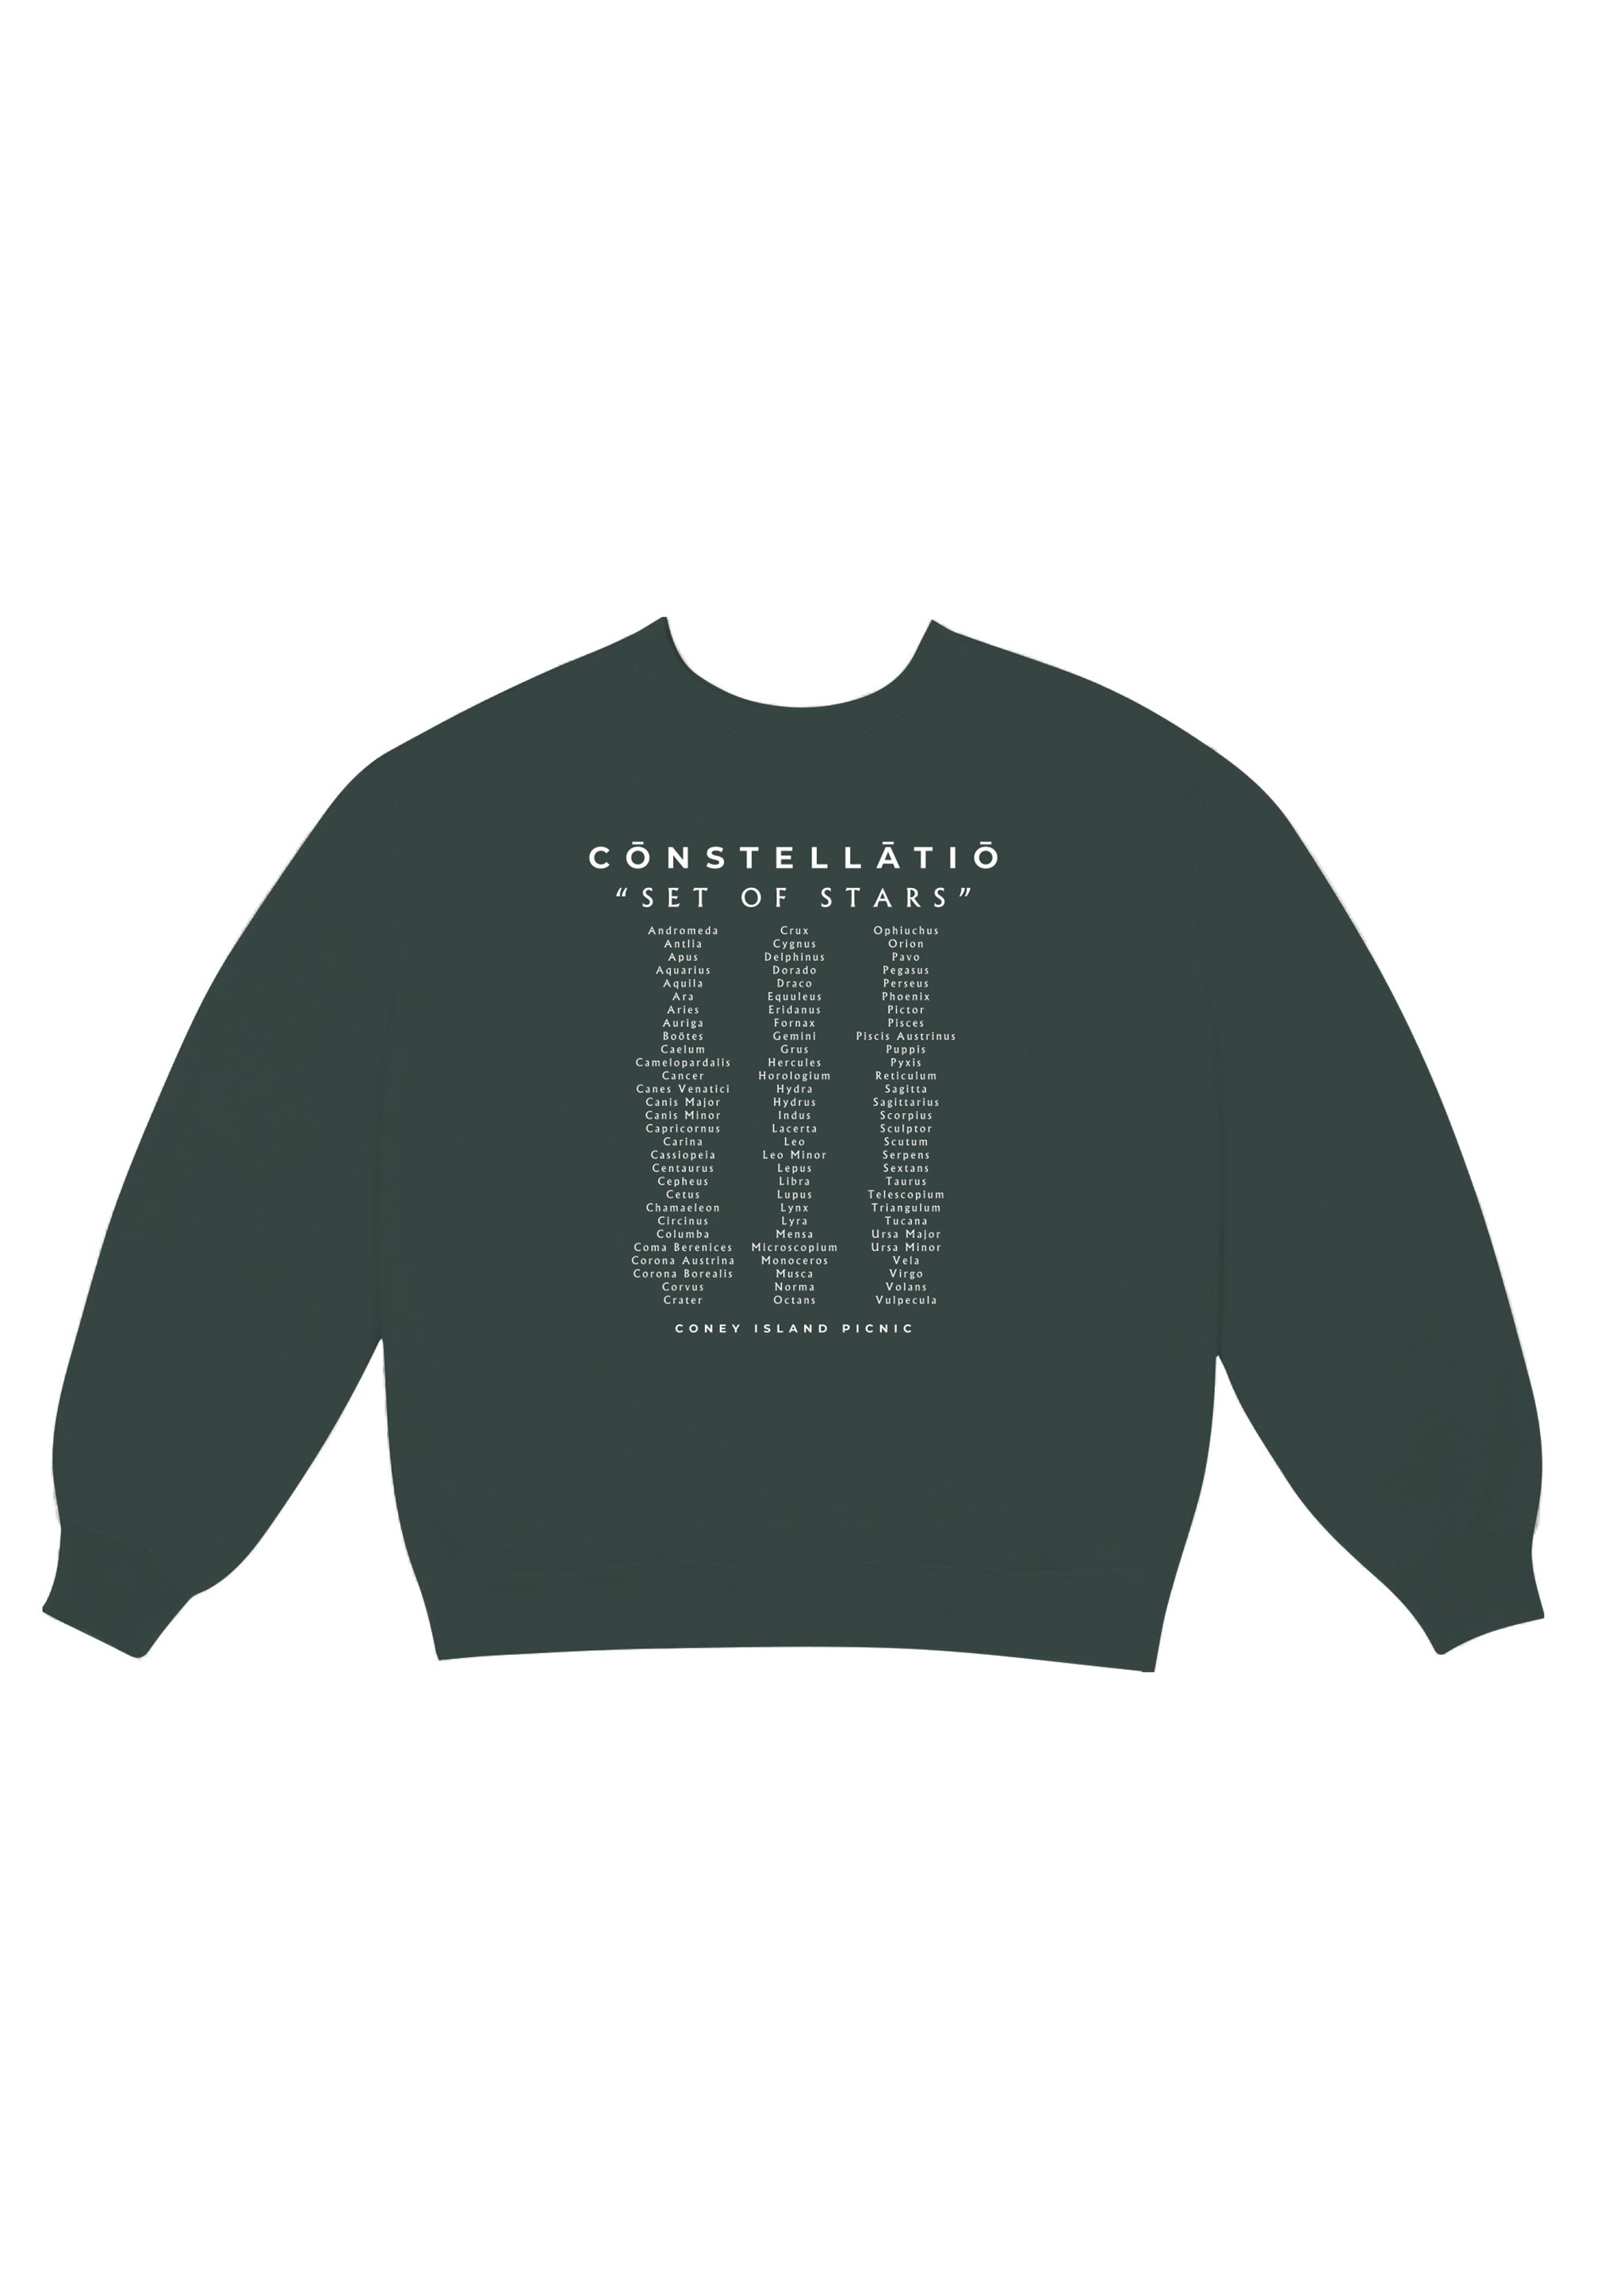 Griffith Park Sky Report Graphic Sweatshirt - Coney Island Picnic